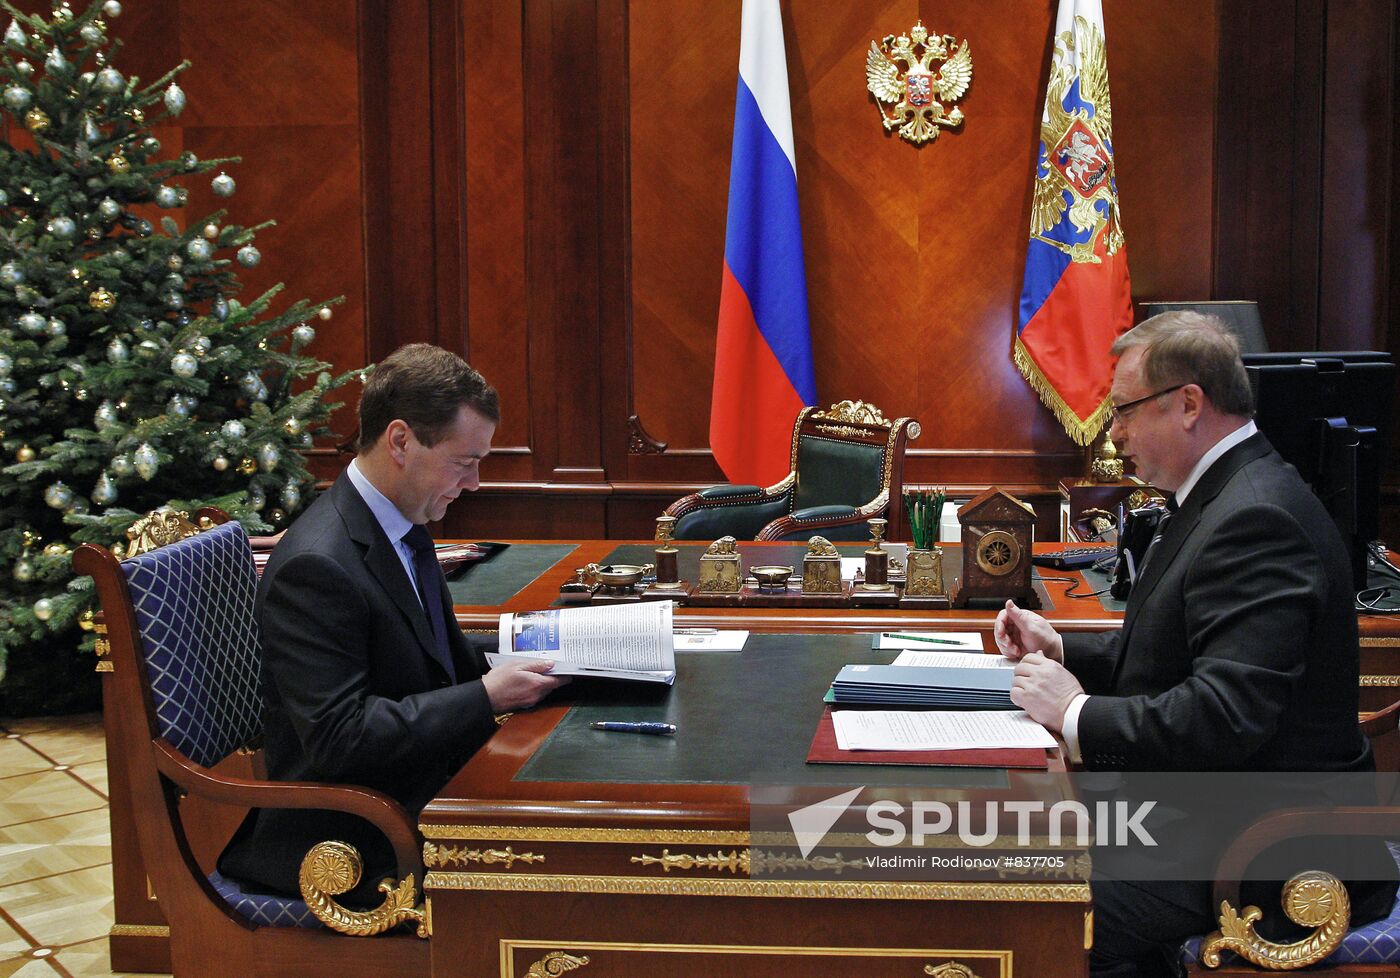 Dmitry Medvedev and Sergei Stepashin